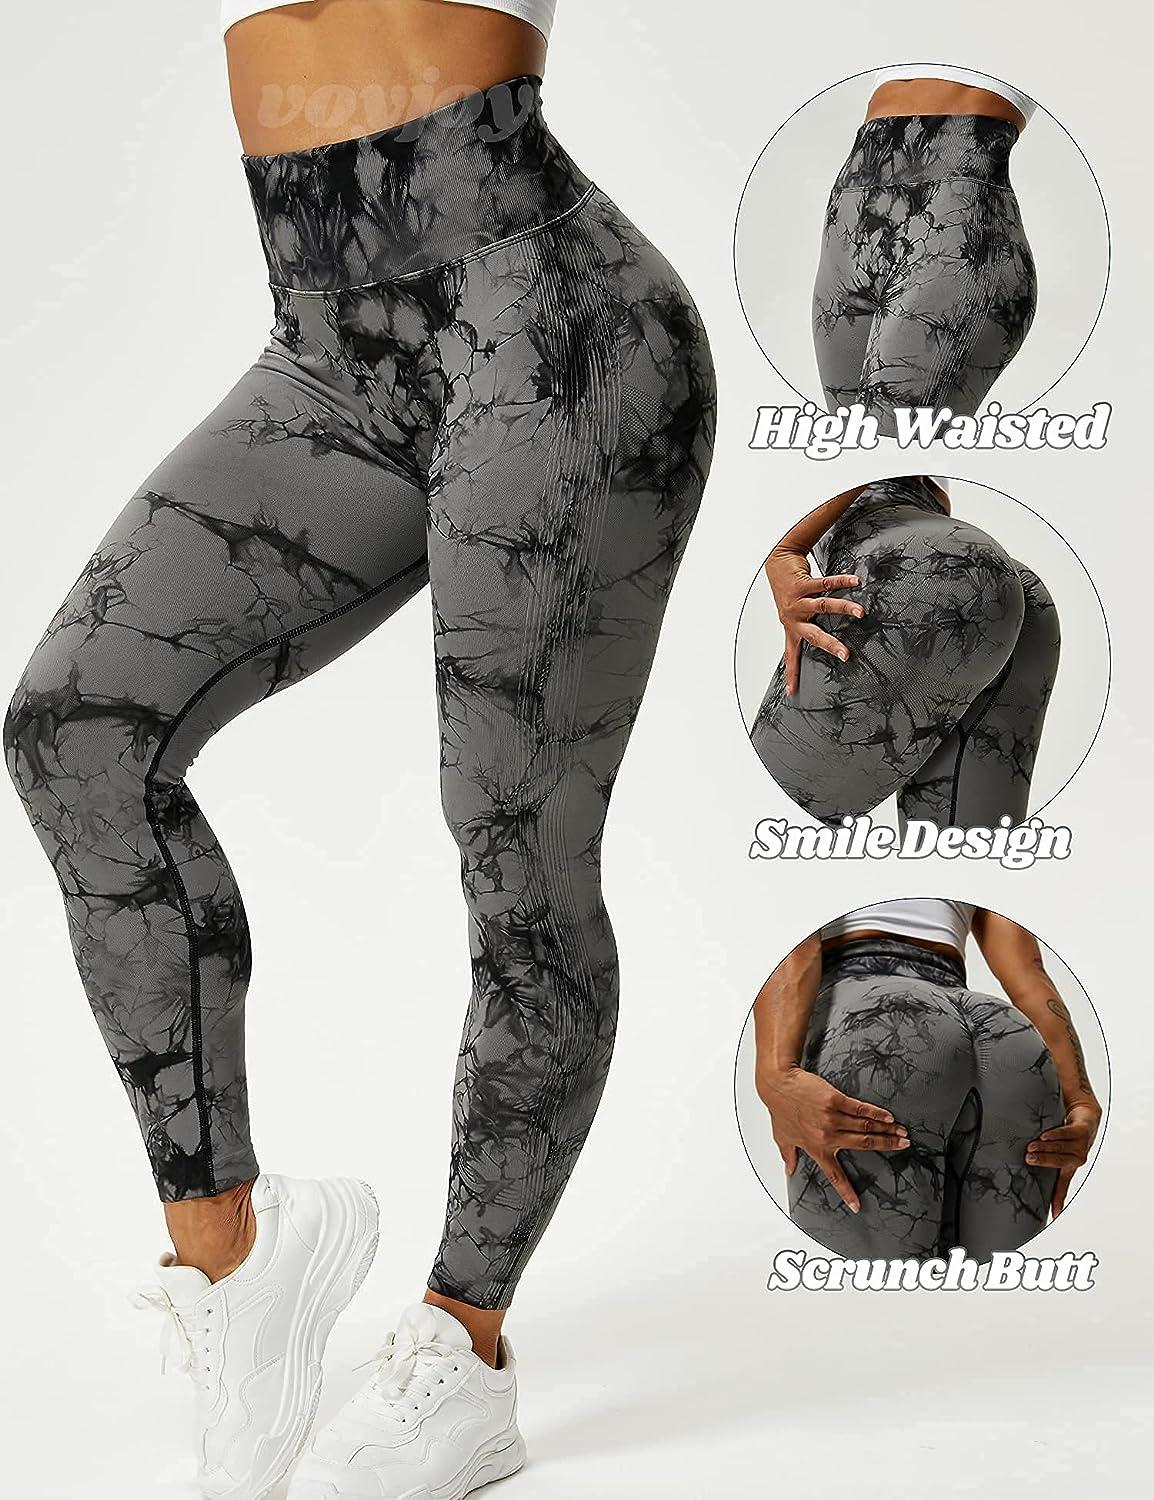 Yoga Pants for Women Comfy Elastic High Waist Tie Dye Workout